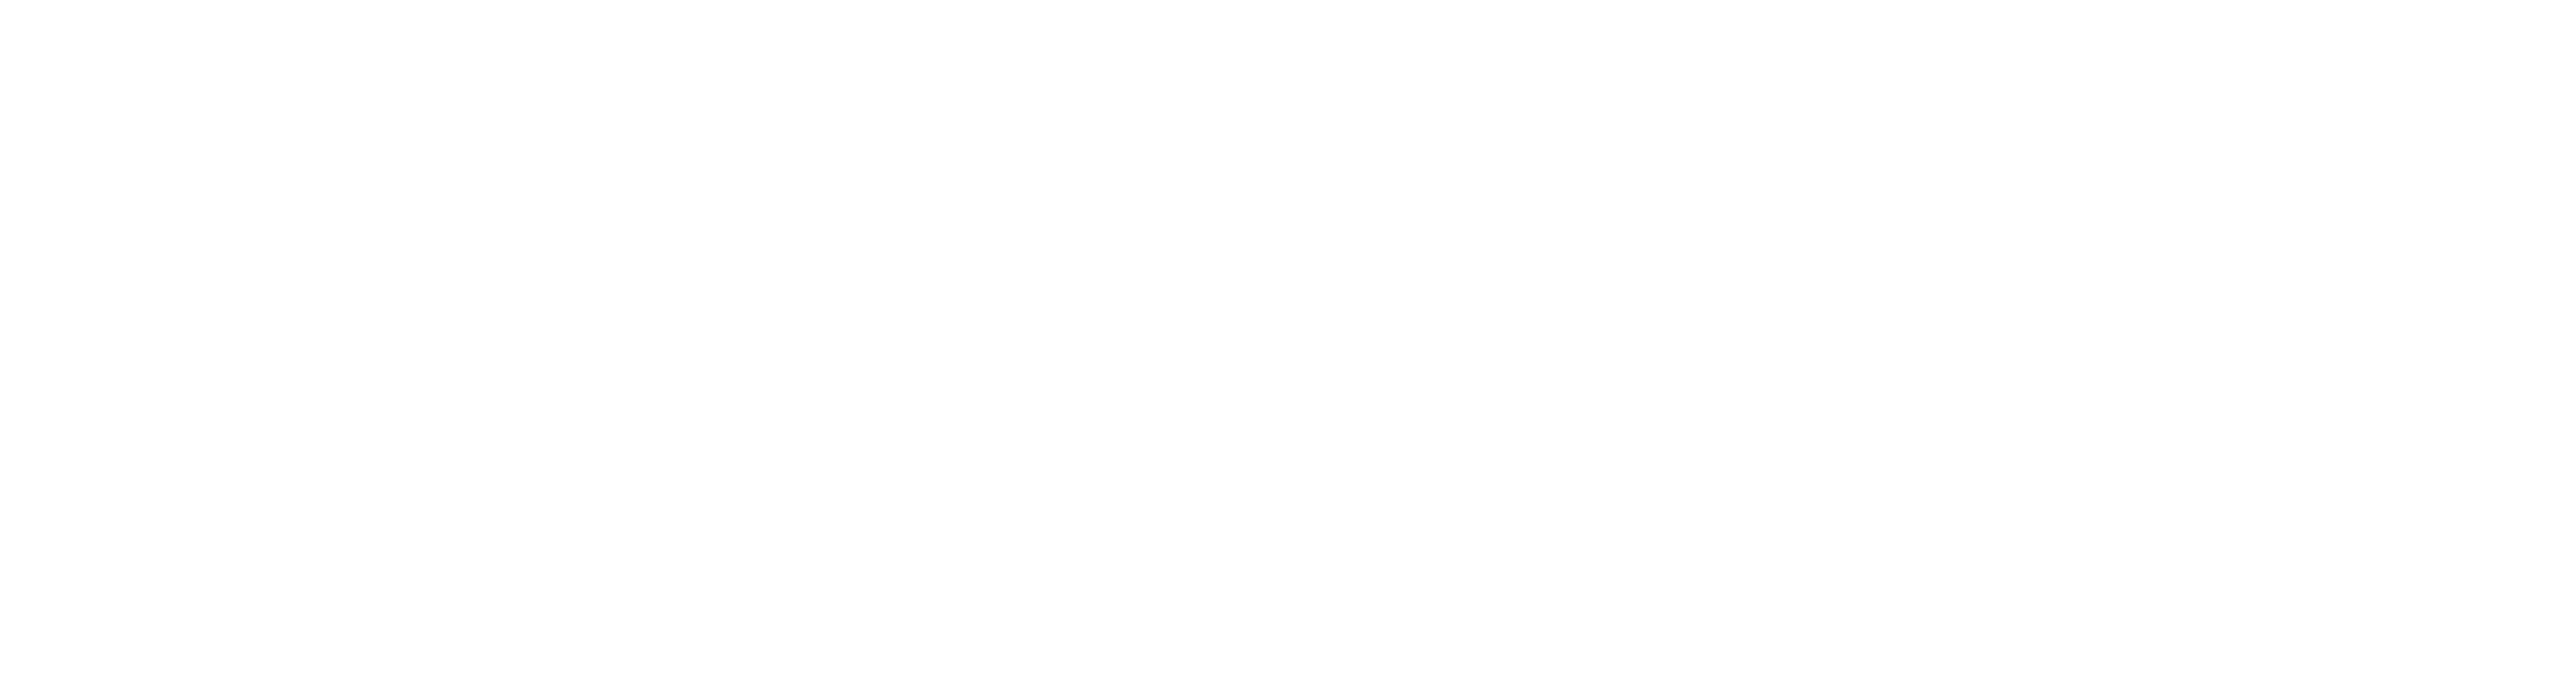 Farm Bill for America's Families